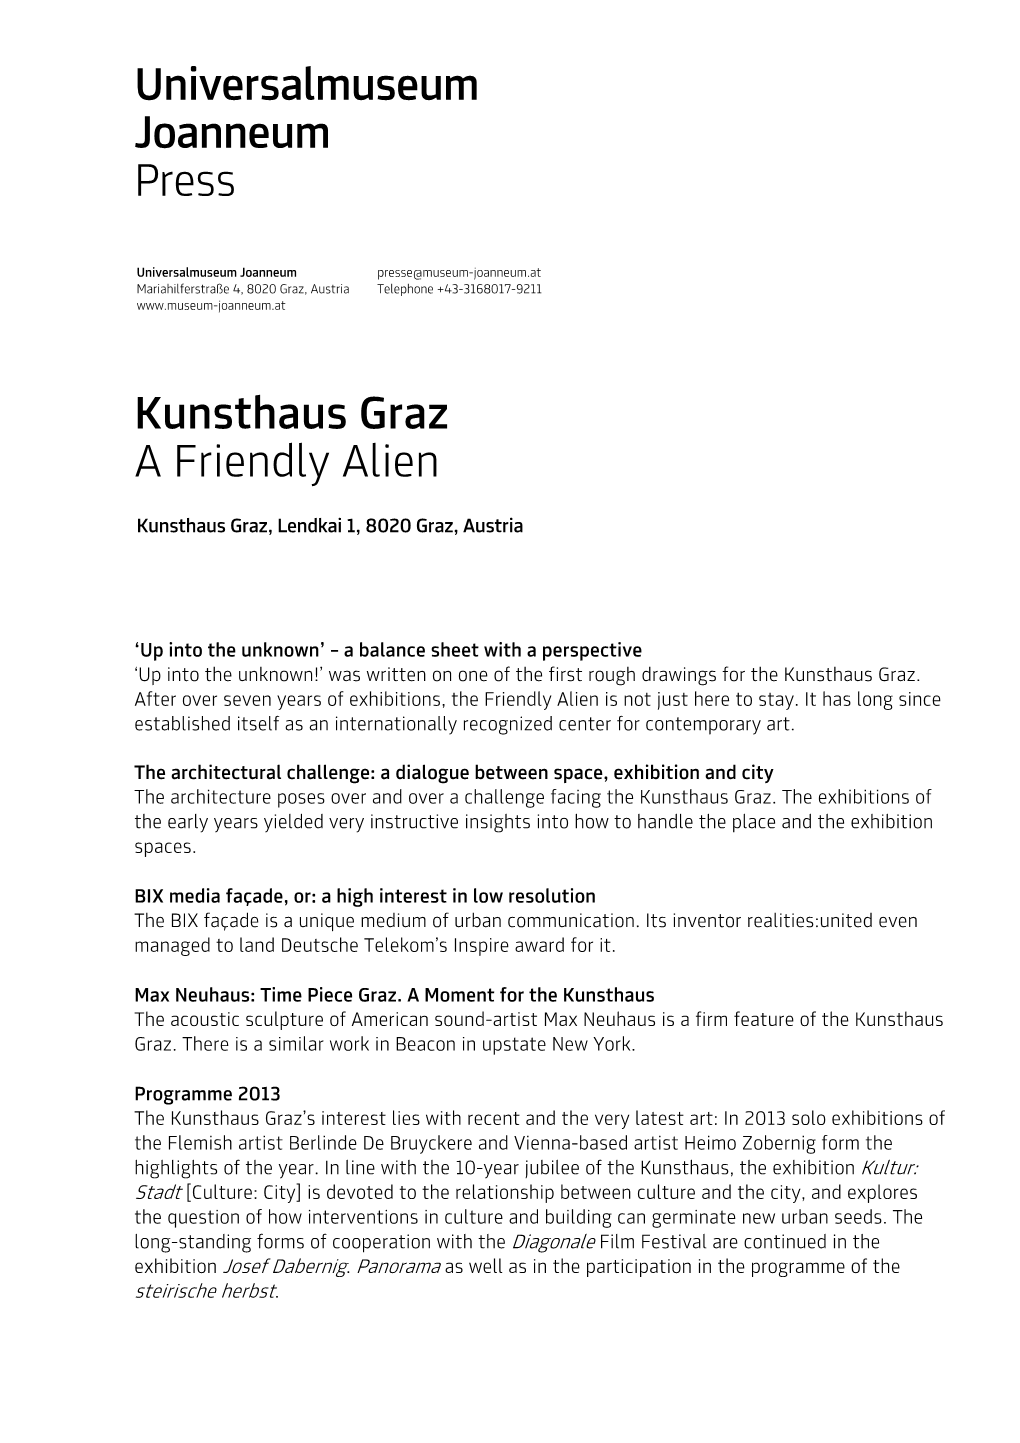 Universalmuseum Joanneum Press Kunsthaus Graz a Friendly Alien